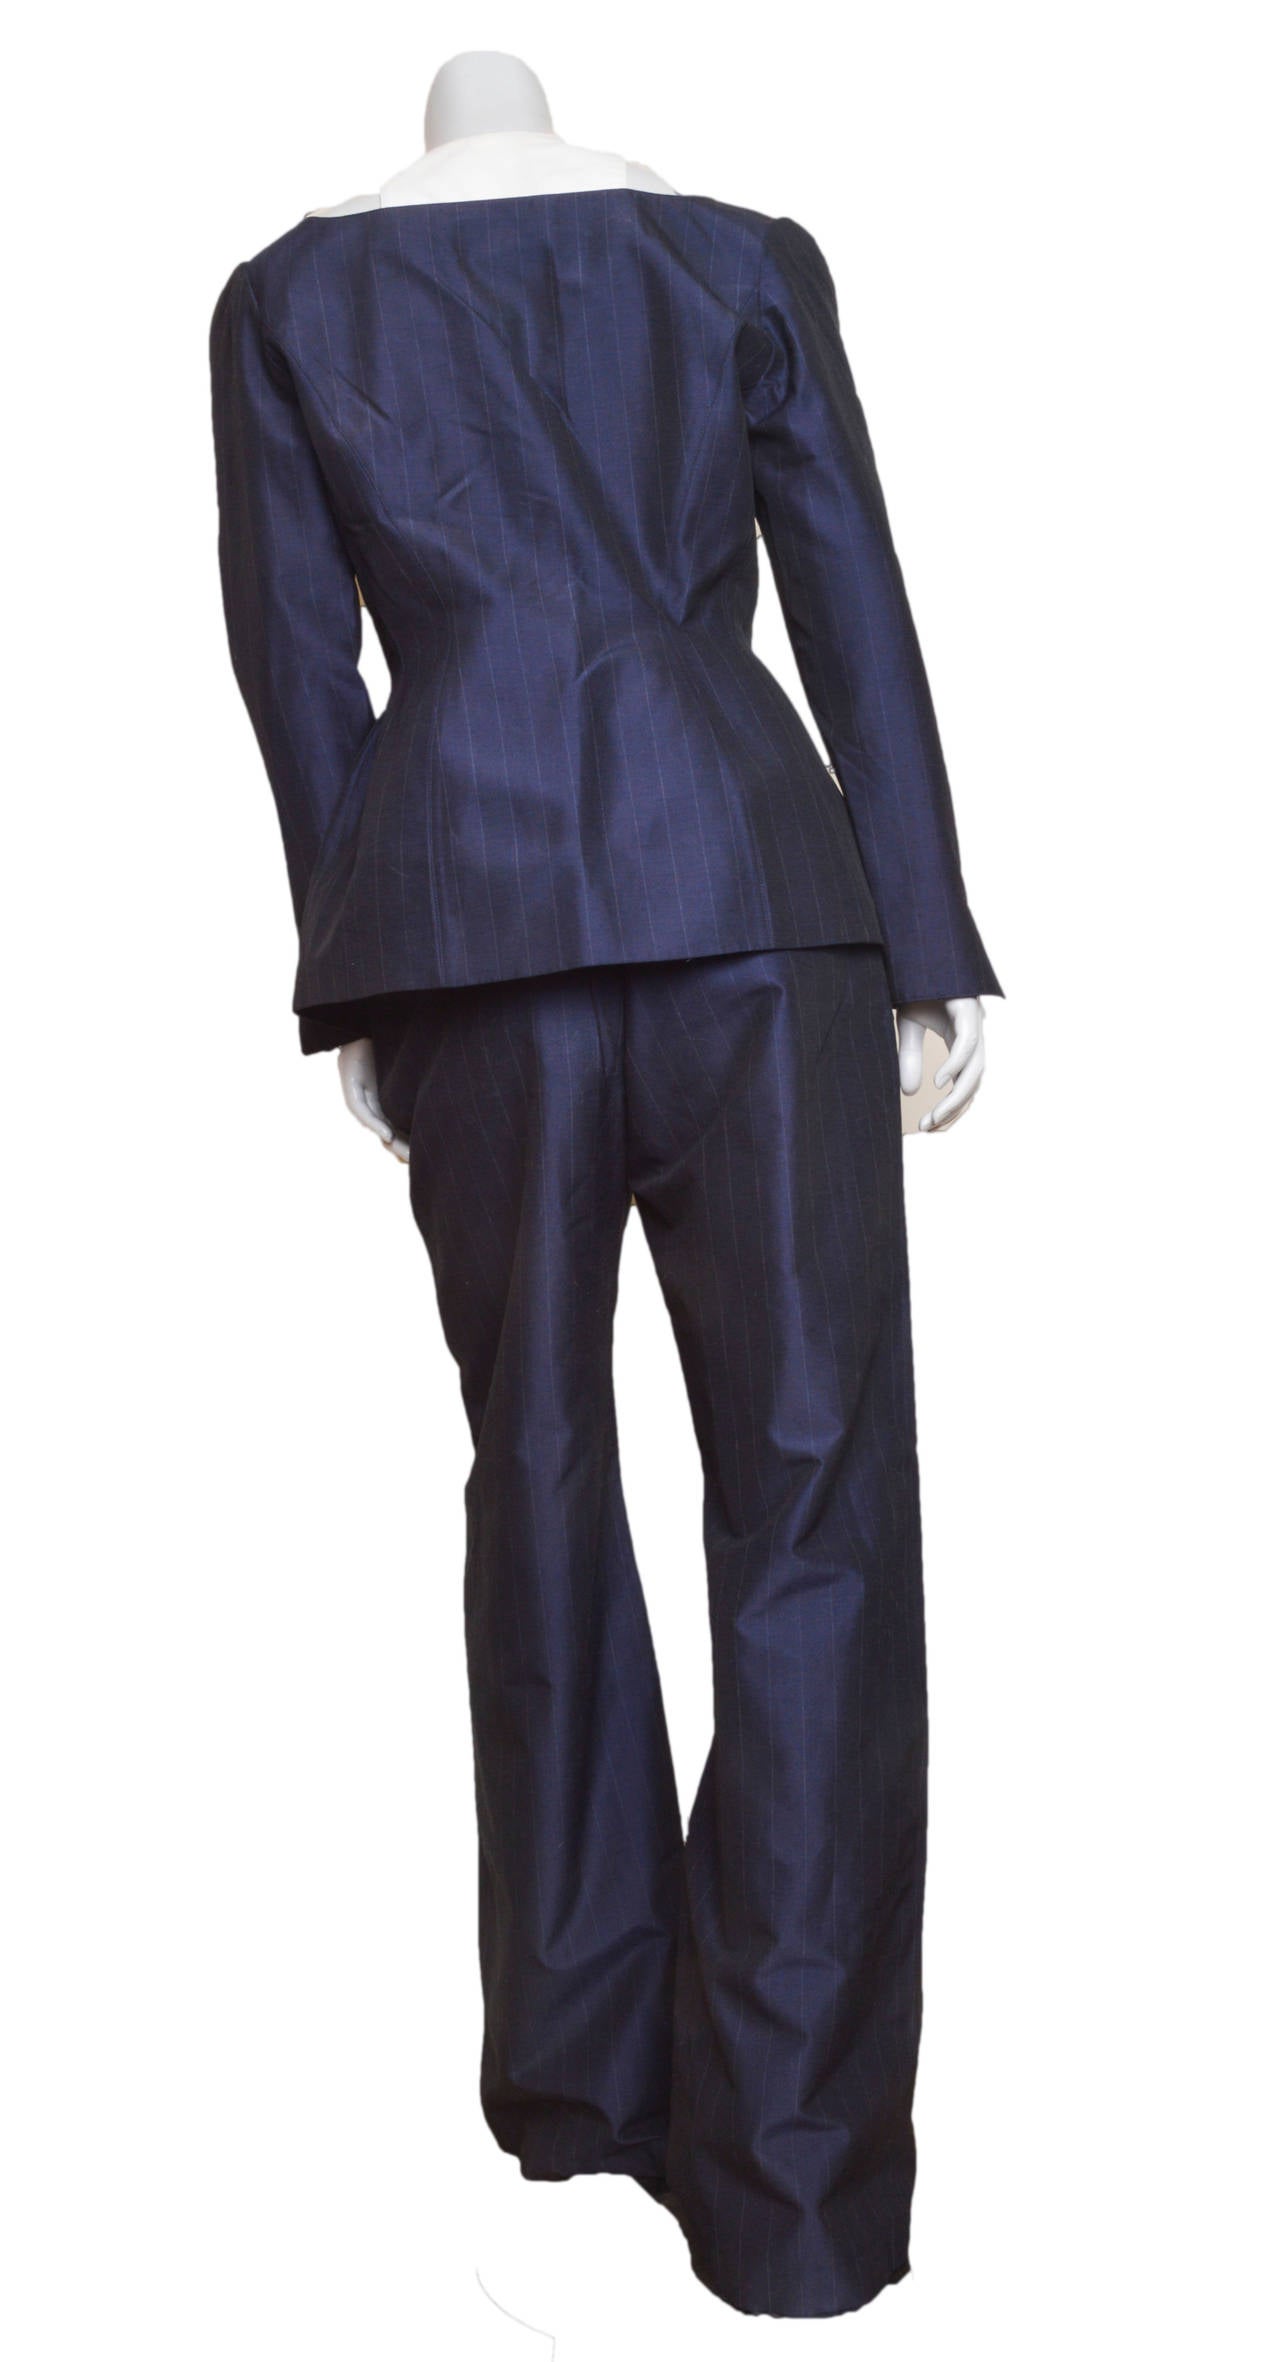 Women's Thierry Mugler Bib Navy Pinstripe Avant Garde Pant Suit